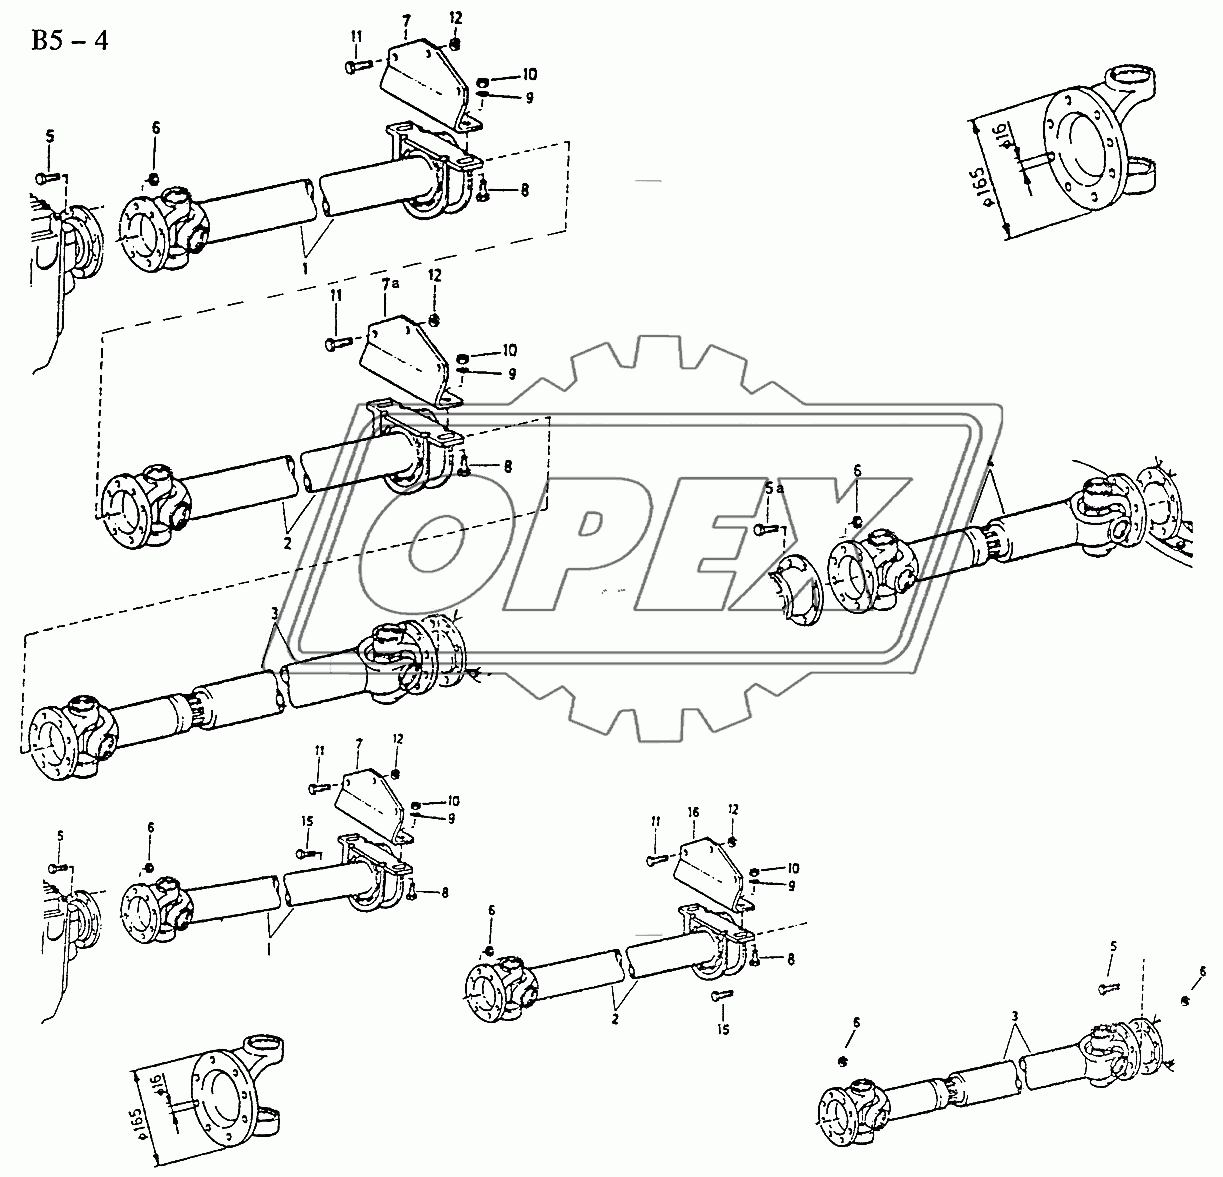 6x4, 8x4 PROPELLER SHAFTS FOR LONG WHEEL BASE 290, 336/K52/6x4 (Fuller gearbox) (B5-4-4)